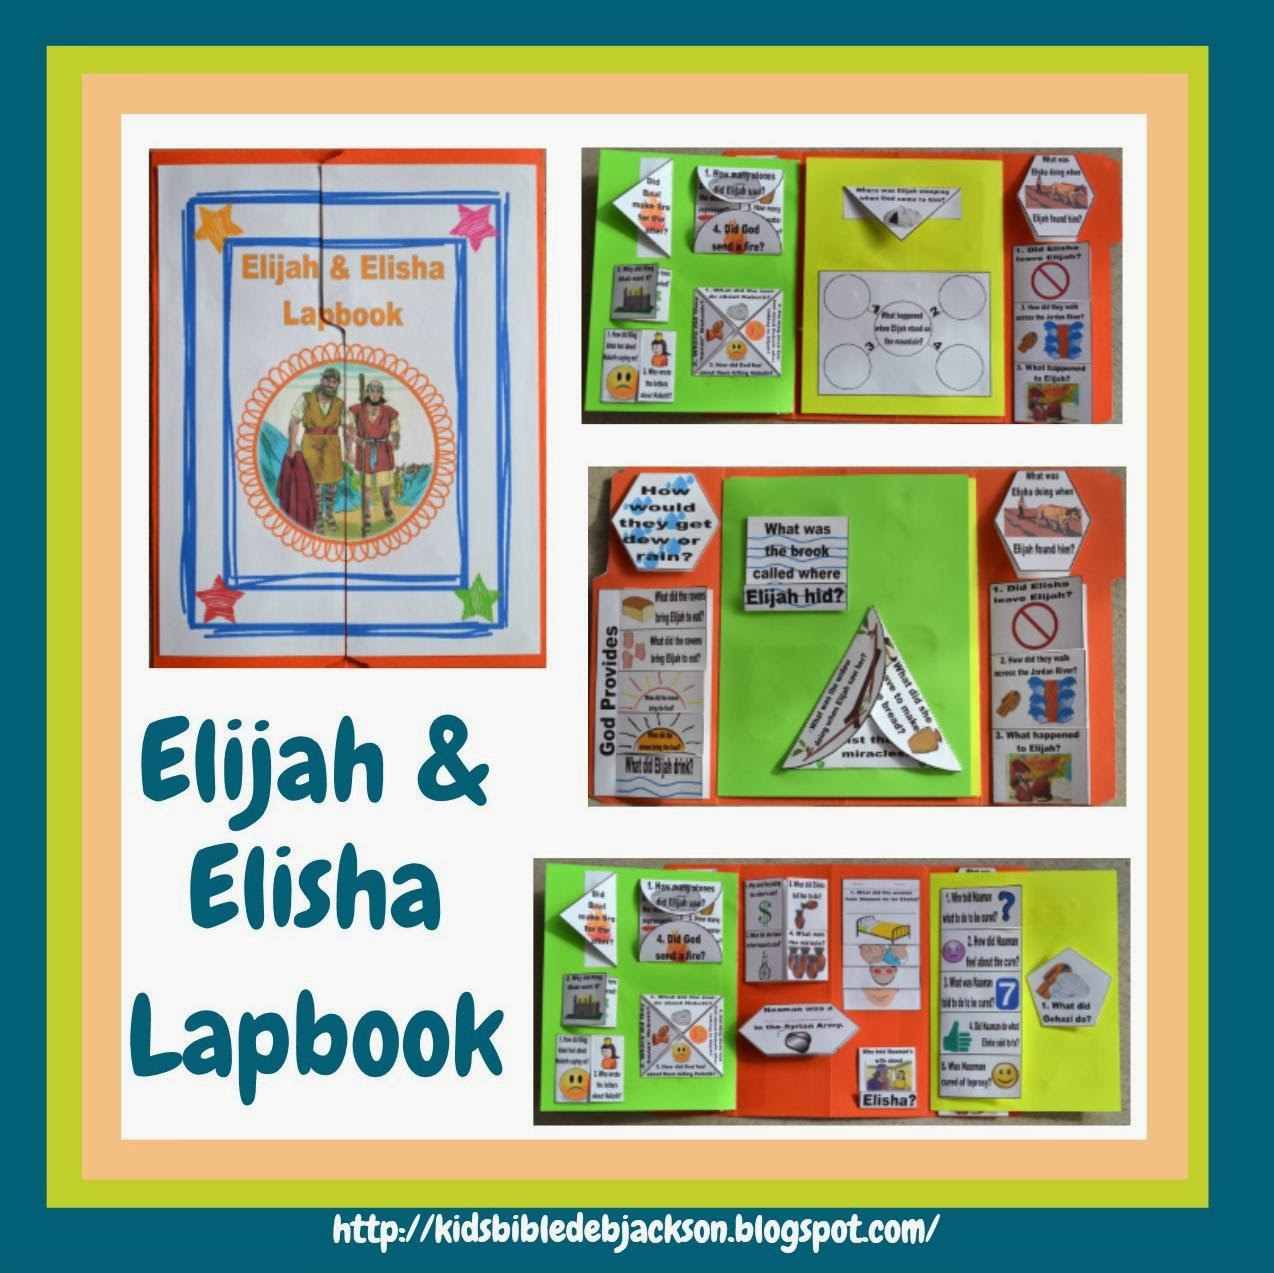 http://kidsbibledebjackson.blogspot.com/2014/02/elijah-elisha-lapbook.html